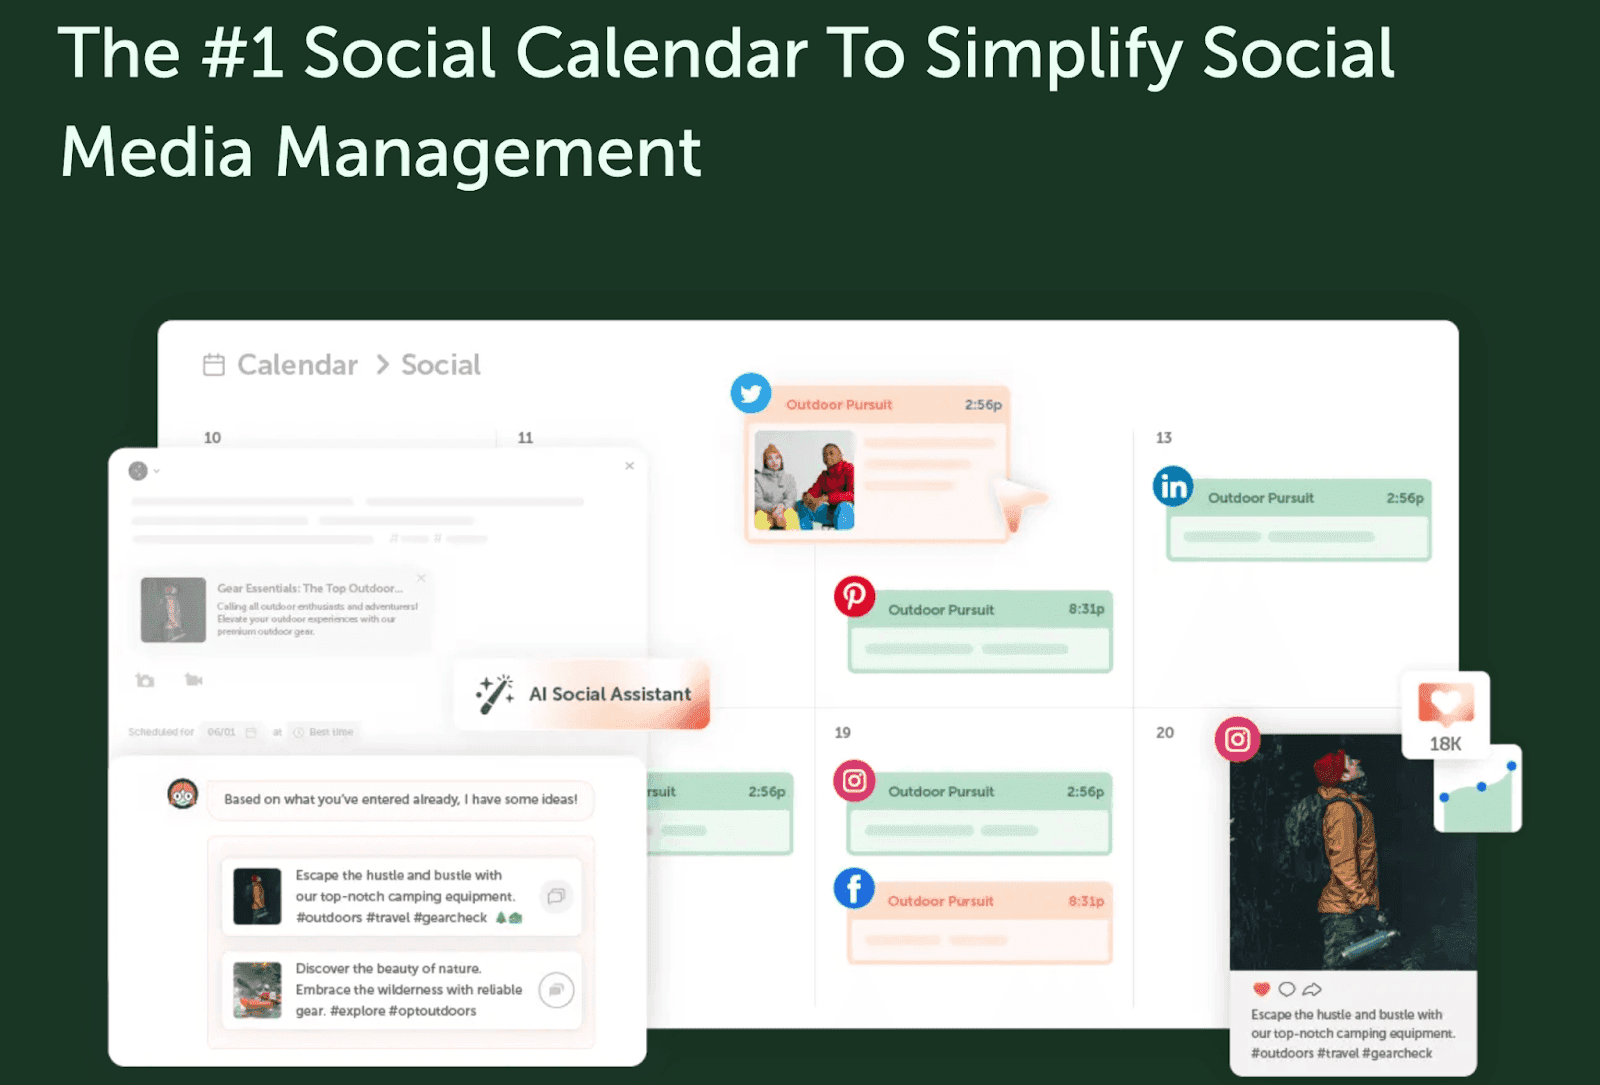 The #1 social calendar to simplify social media management